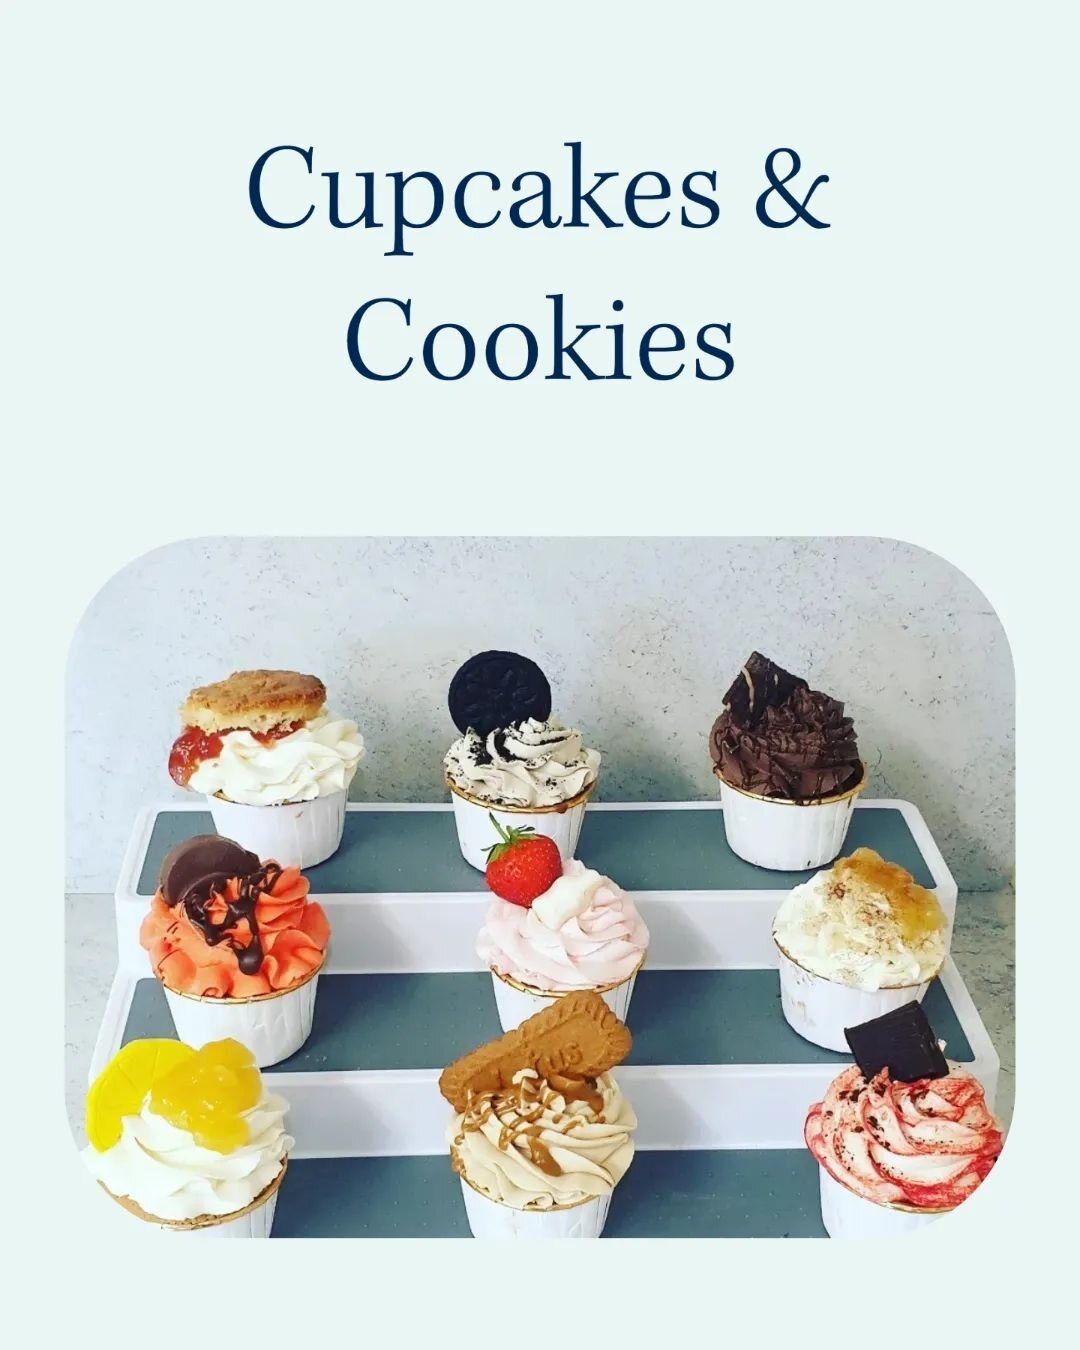 🧁Follow the link below to see our Cupcake Menu:

🔗https://www.crumbscakesbakes.co.uk/cupcakes-cookies

#cupcakes #menu #cakedecorator
#pastrychef #cakemaker #cakedesign #cakeart #cakeislife #crumbscakesandbakes